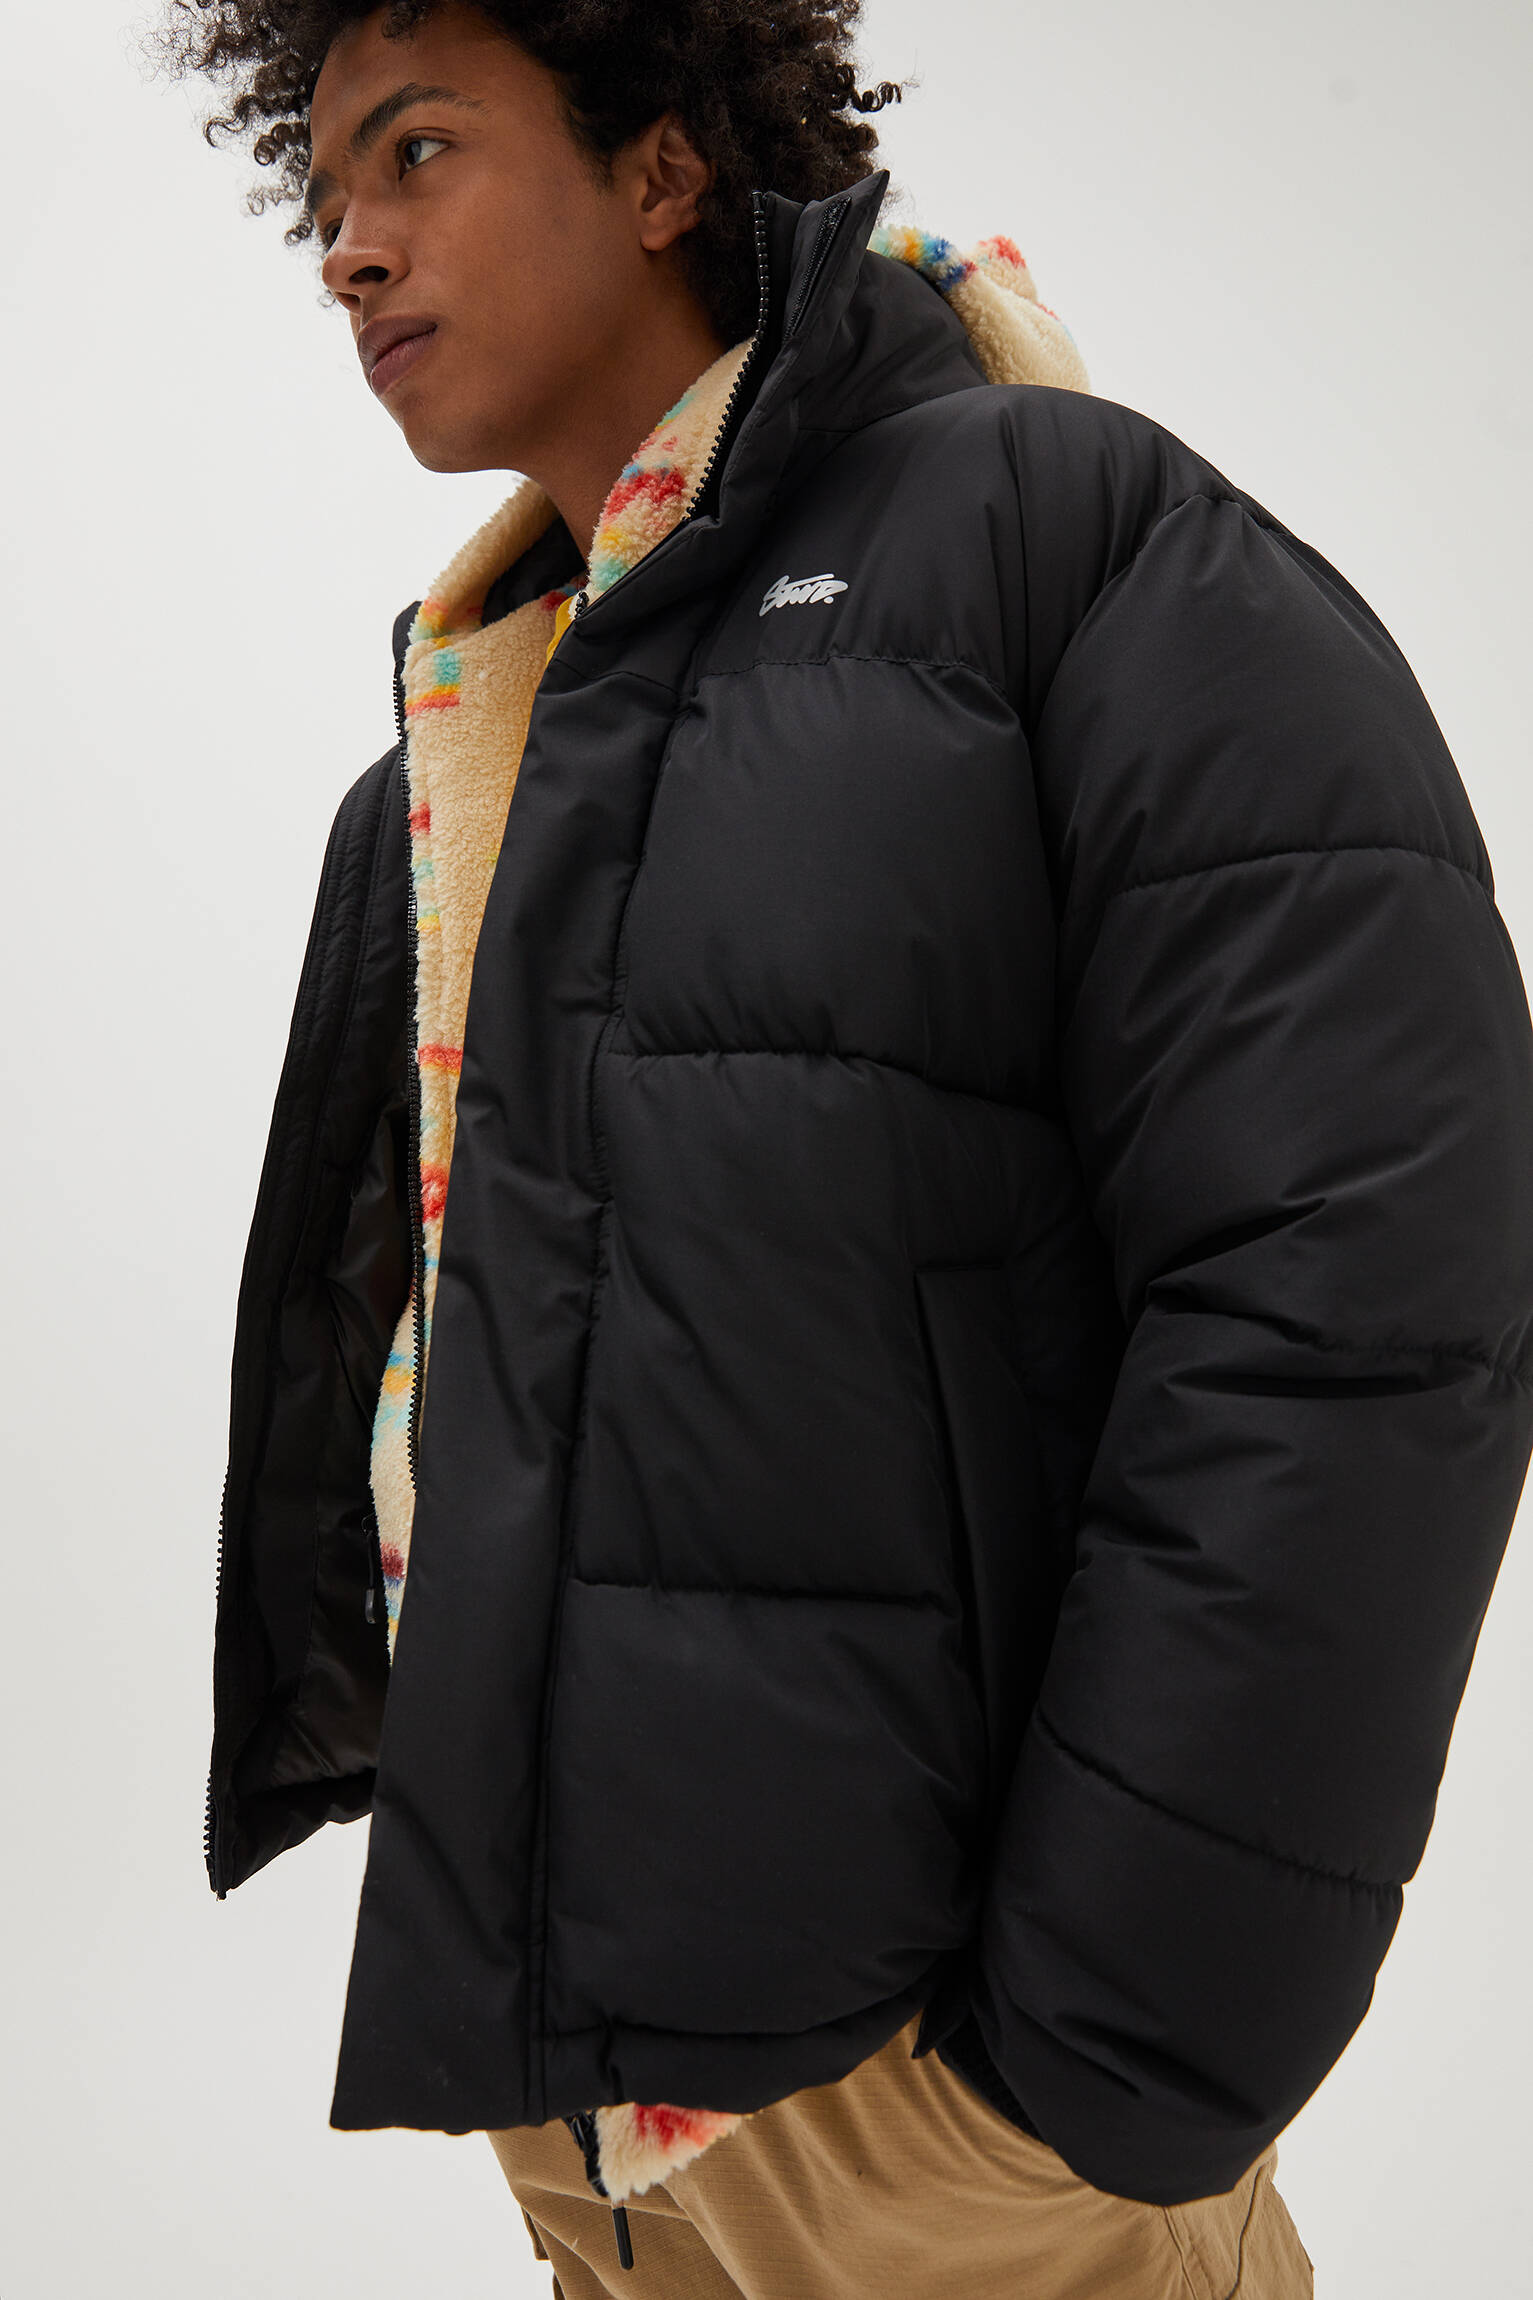 Modalite.net - Pull & Bear - Basic STWD puffer jacket